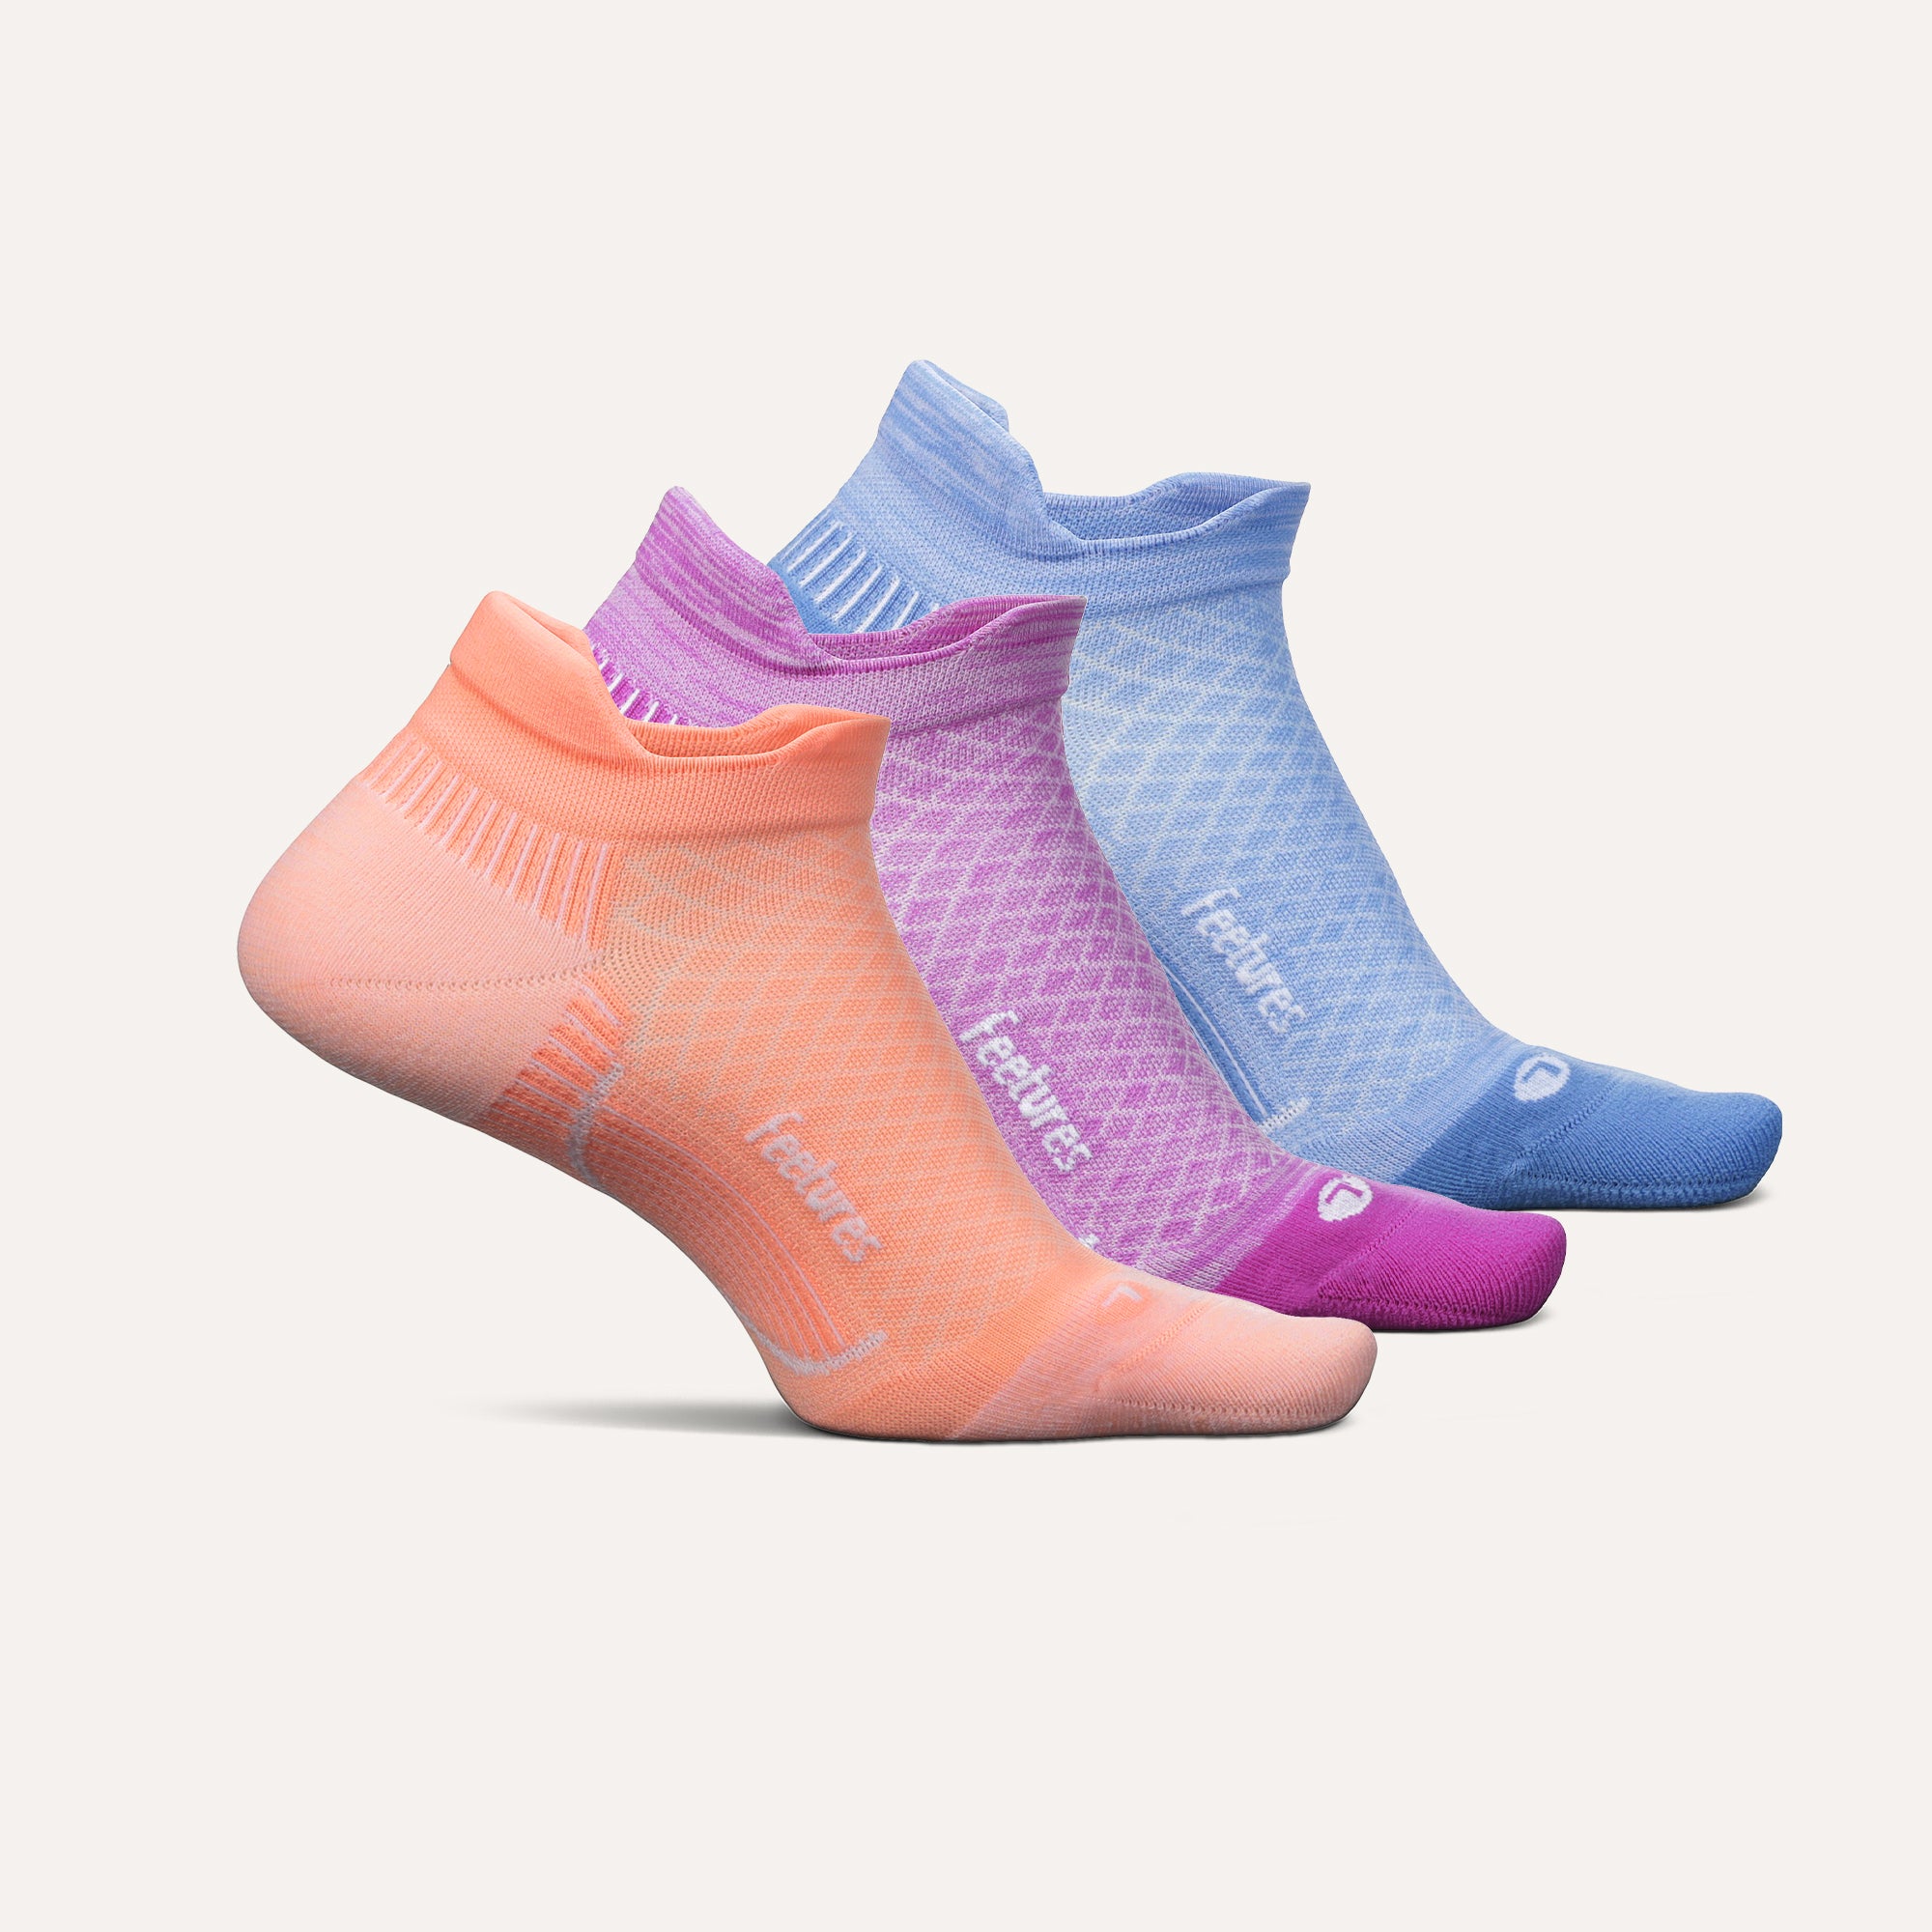 Clam mesh socks – Tsenre and Will